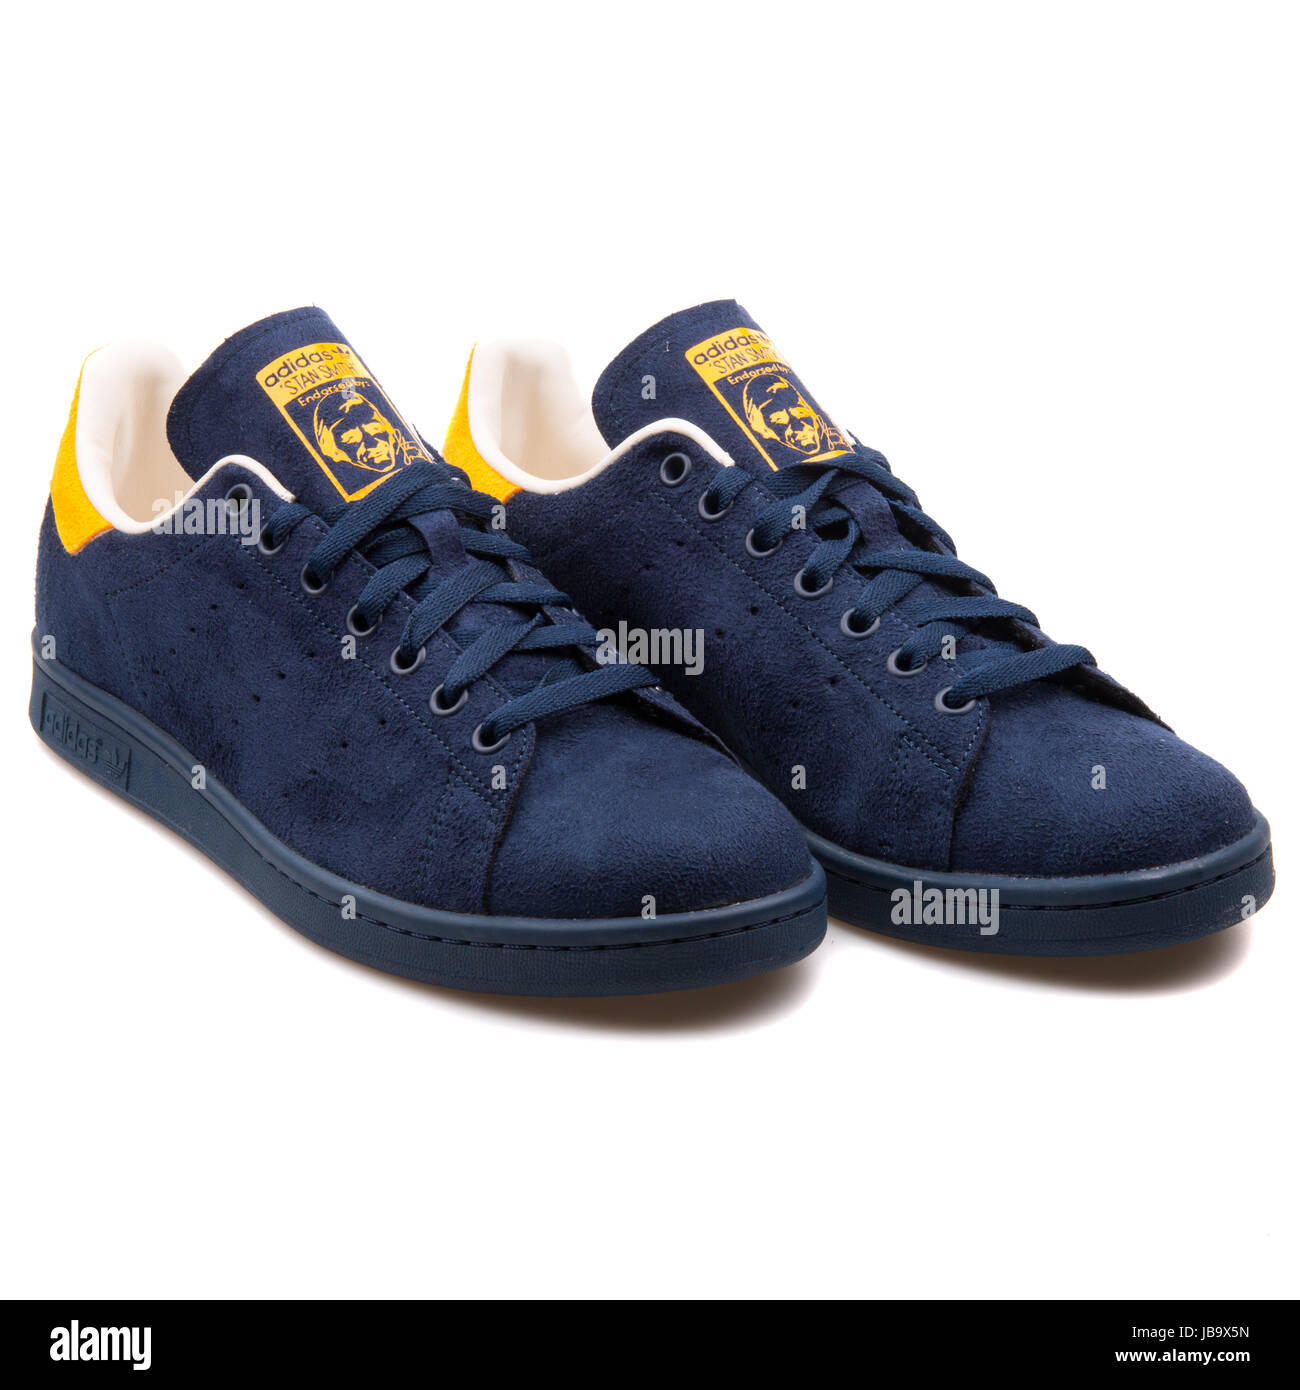 Adidas Stan Smith Bleu Marine jaune et de chaussures de sport hommes -  B24707 Photo Stock - Alamy